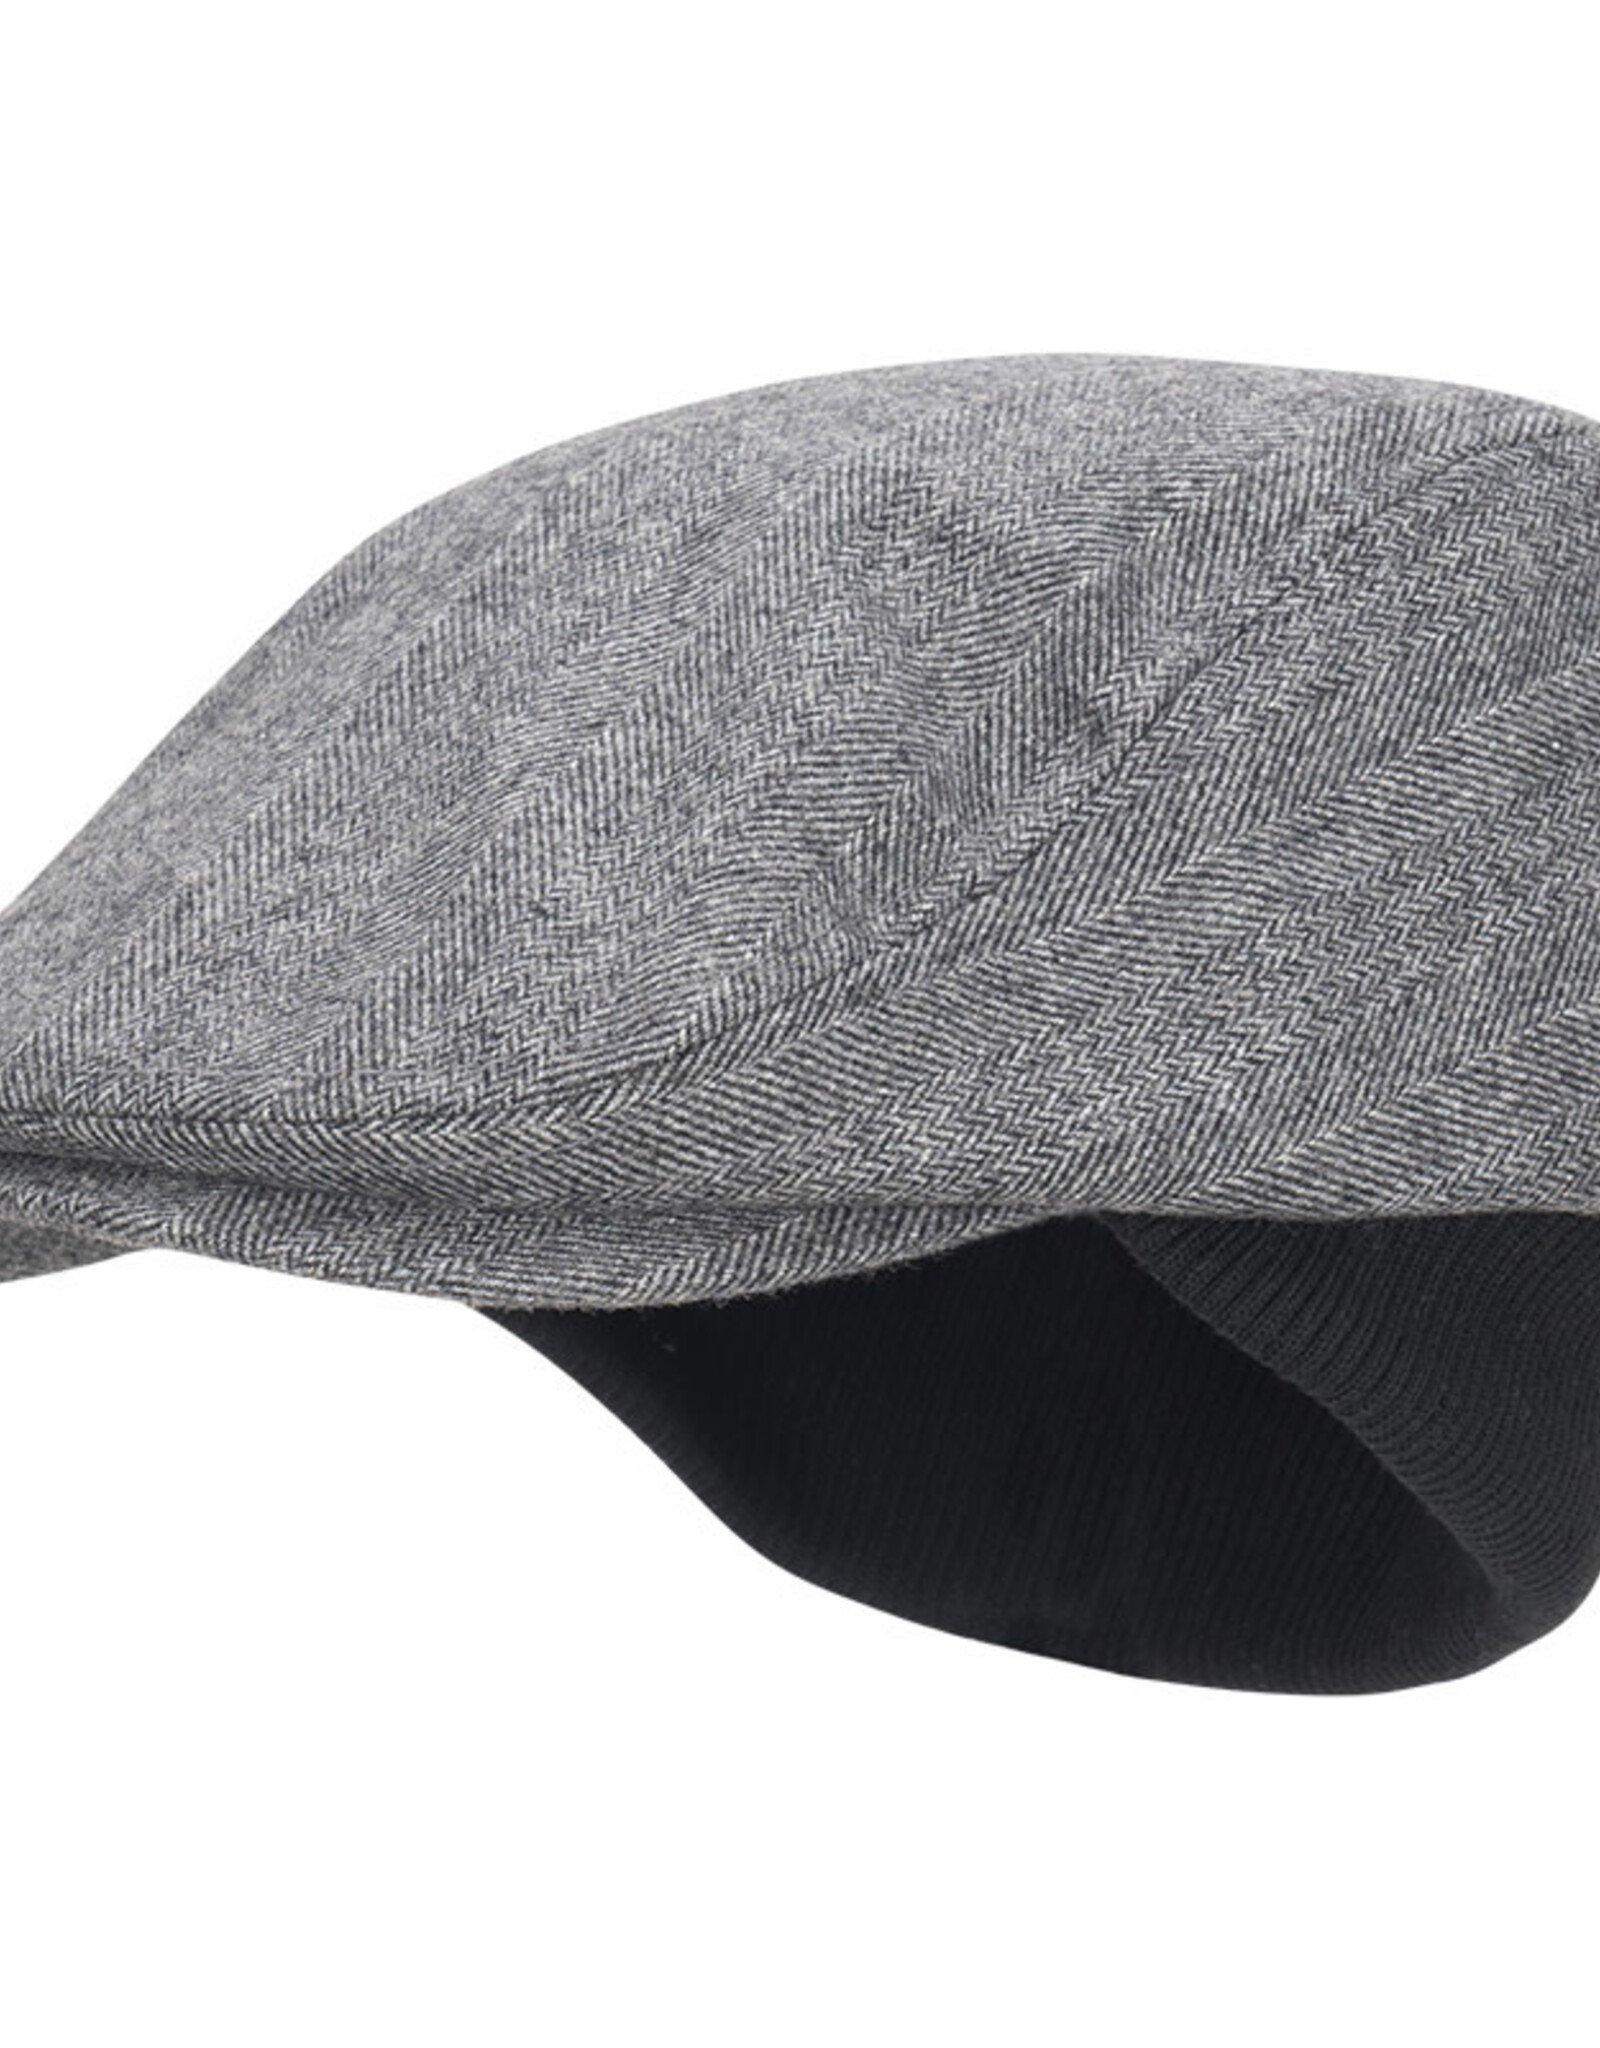 HAT-IVY CAP "CHEVRON" W/EARFLAPS